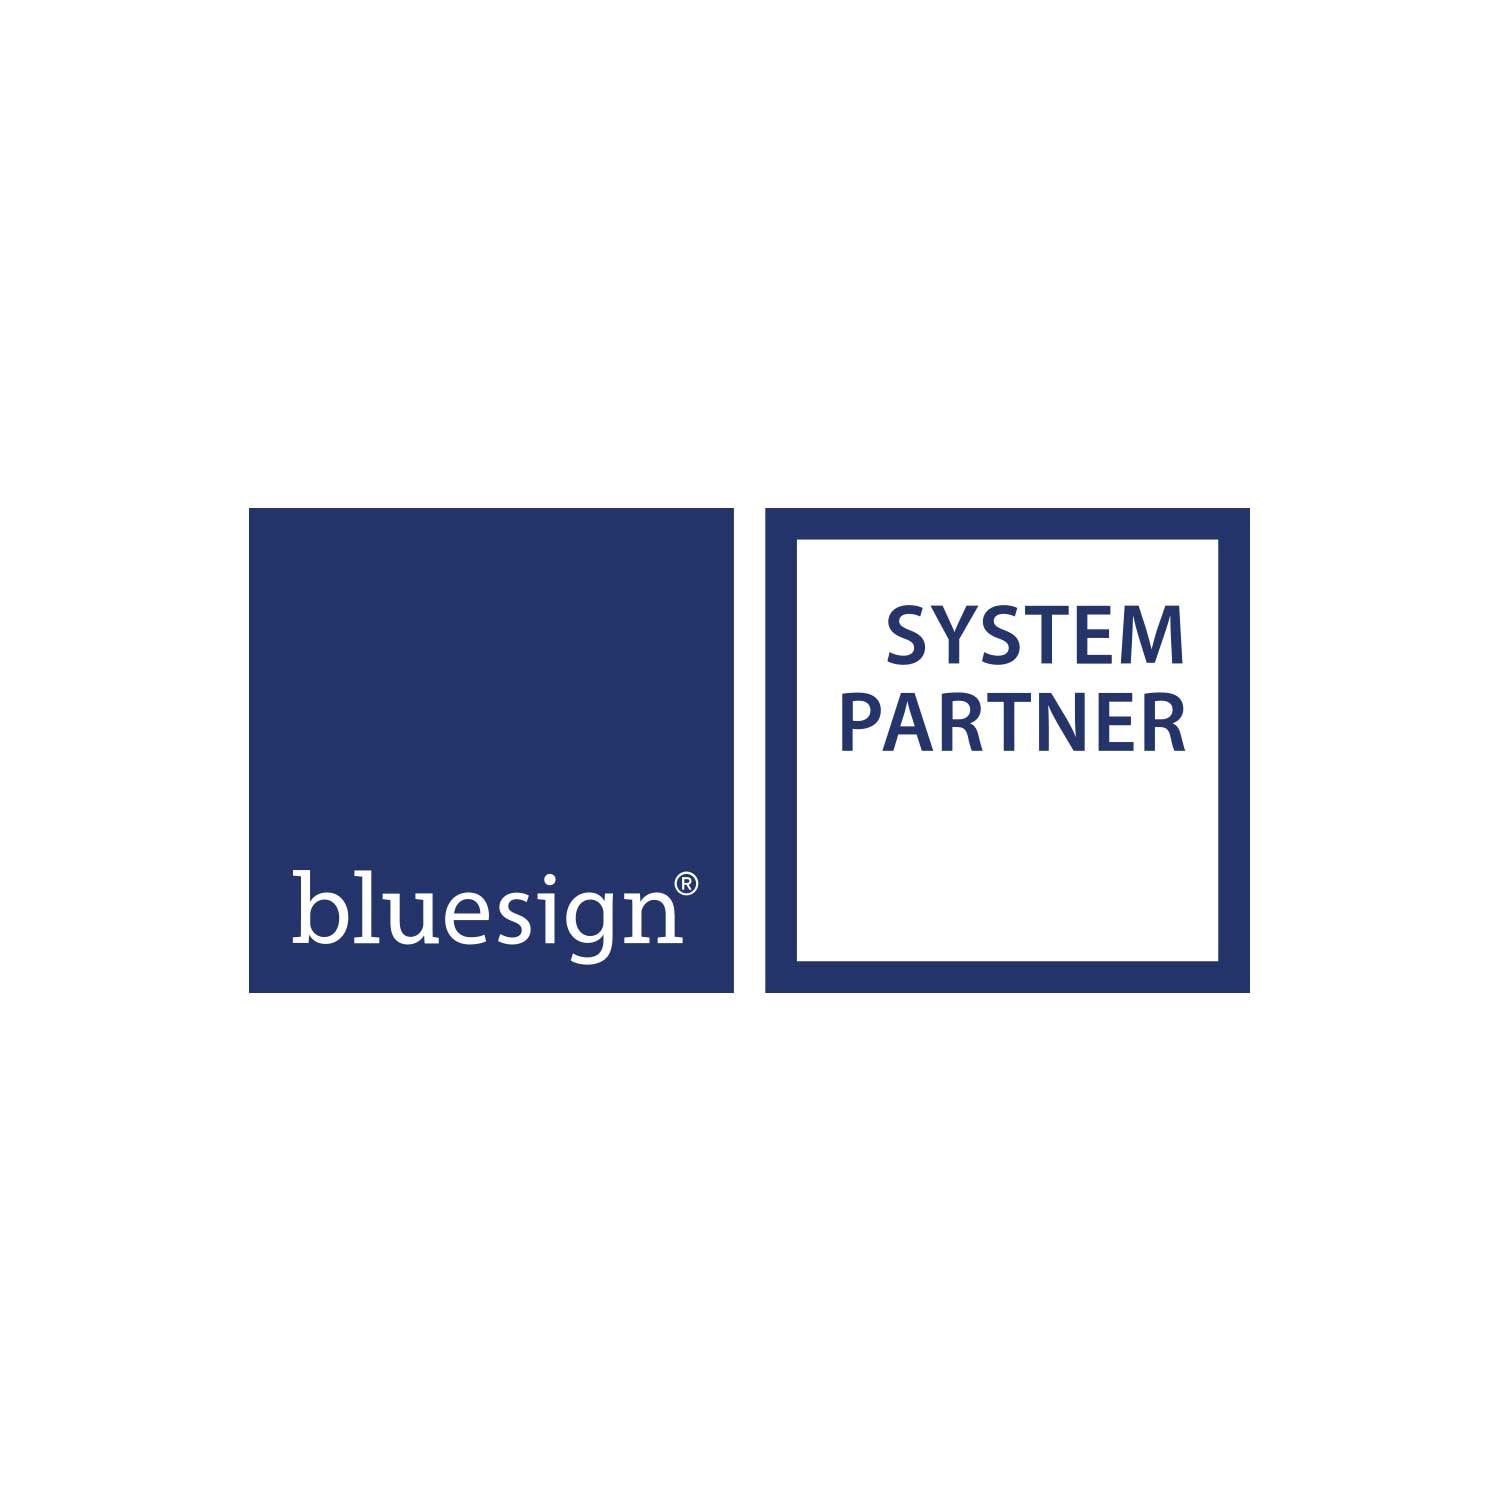 bluesign® system partnership